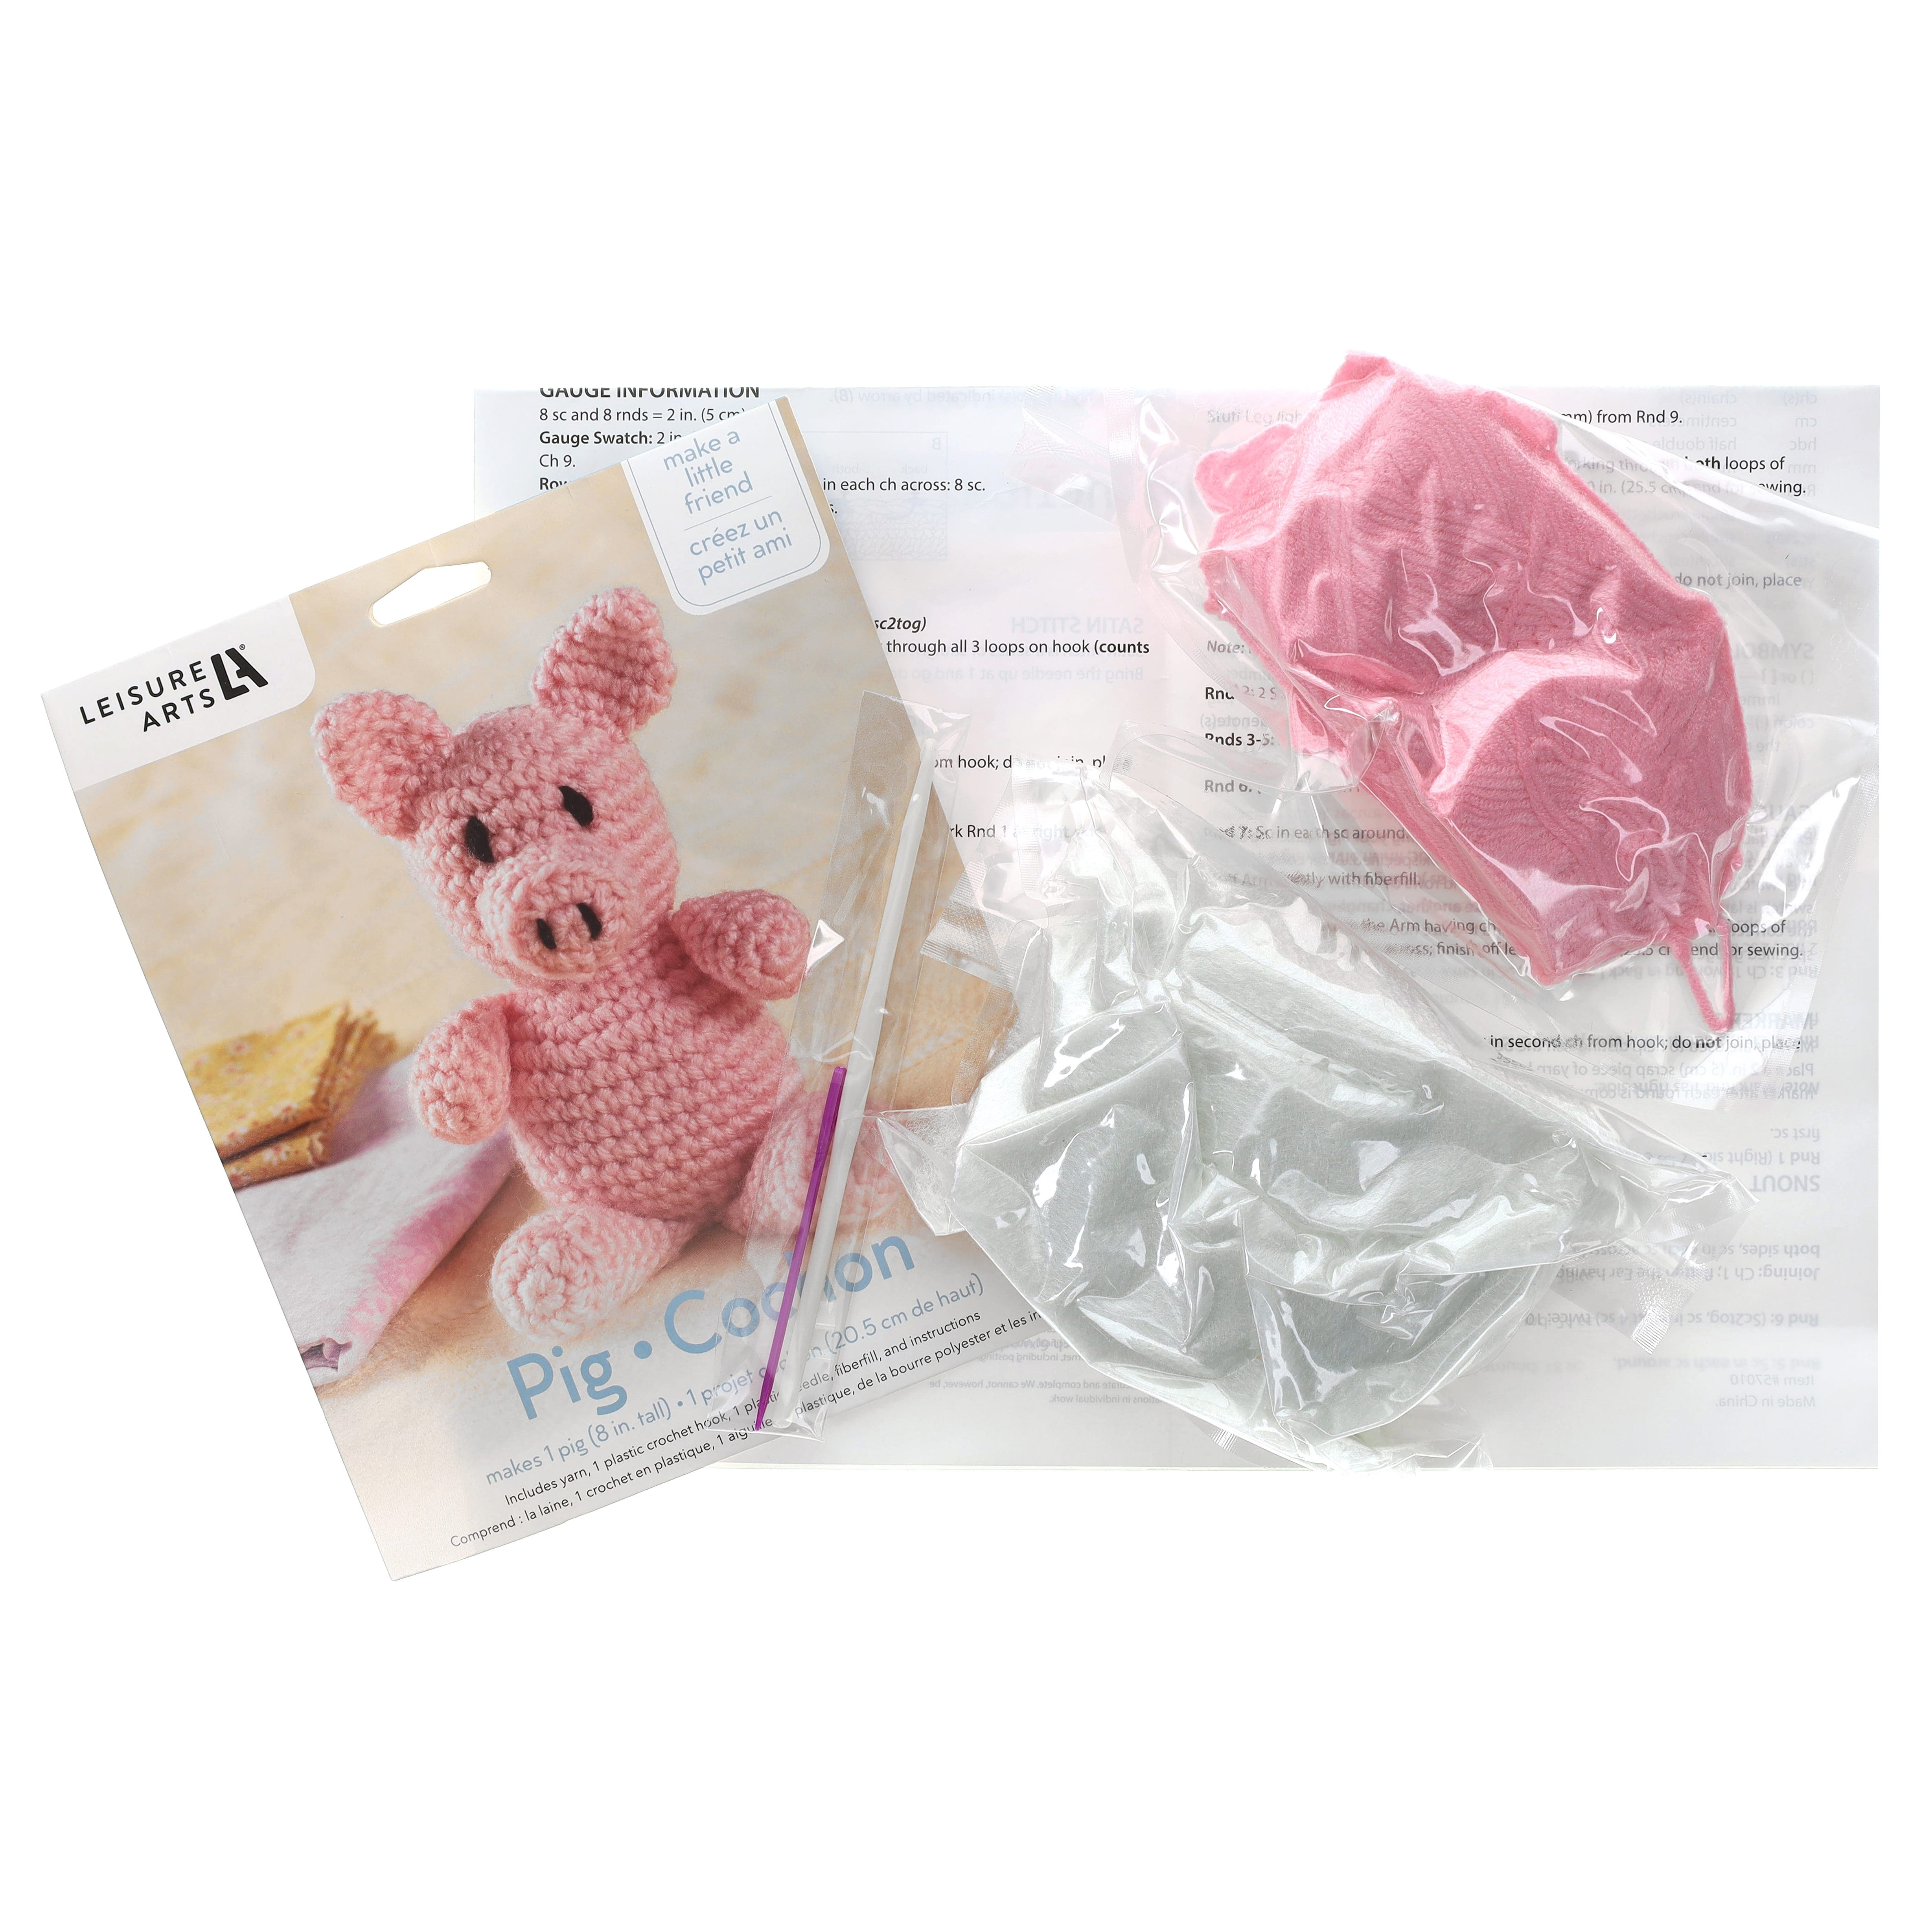 Leisure Arts Make A Little Friend Pudgie Piggy Crochet Kit